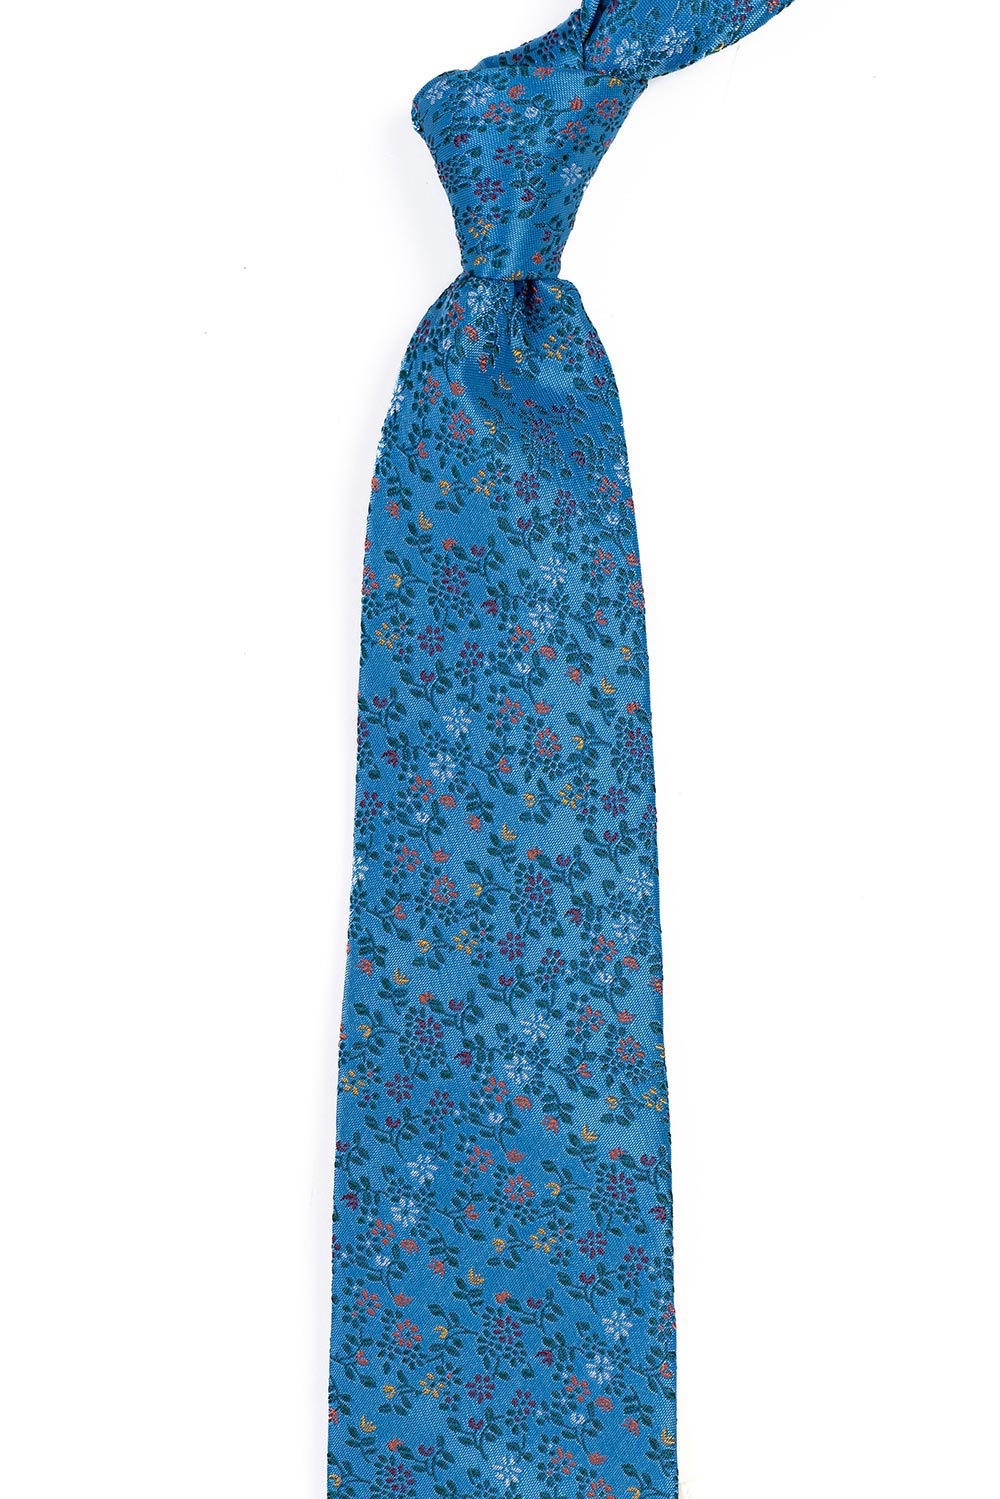 Cravata poliester tesut bleu print floral 1